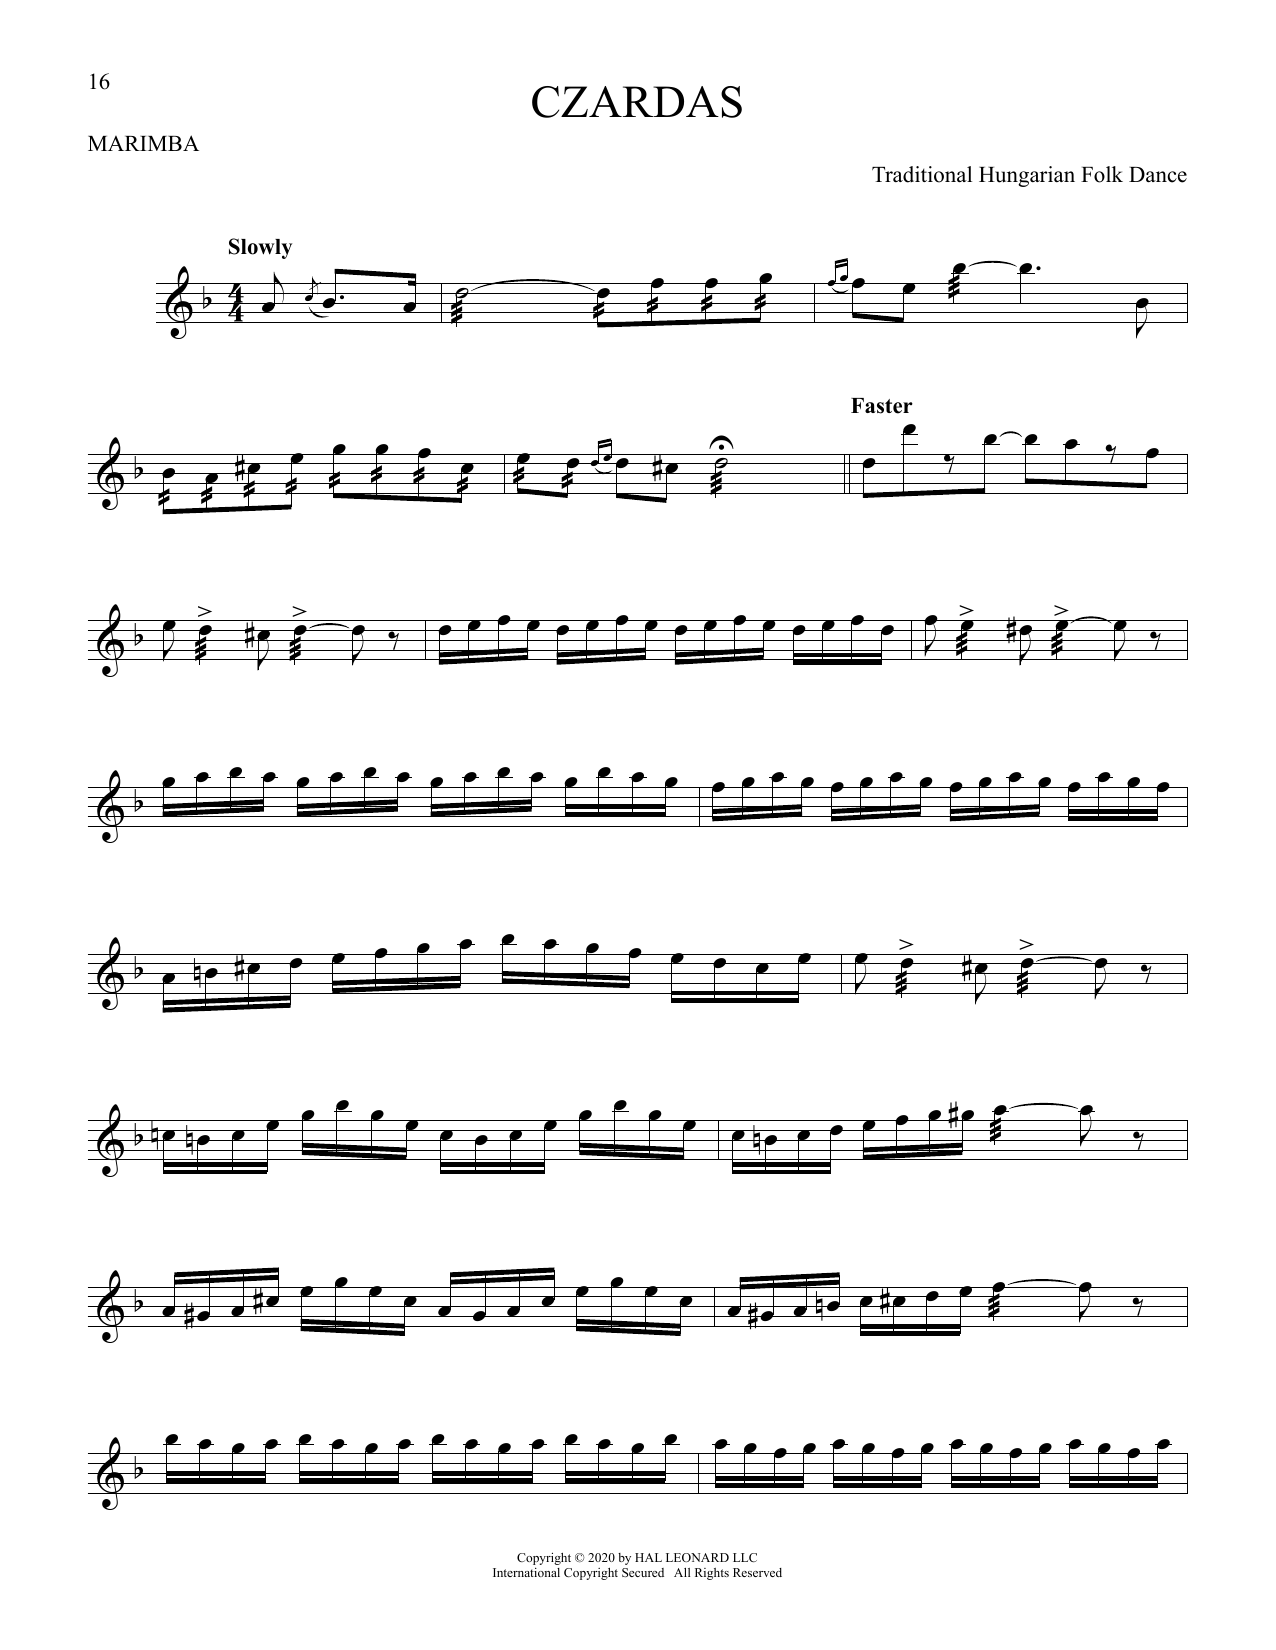 Traditional Hungarian Folk Dance Czardas Sheet Music Notes & Chords for Marimba Solo - Download or Print PDF